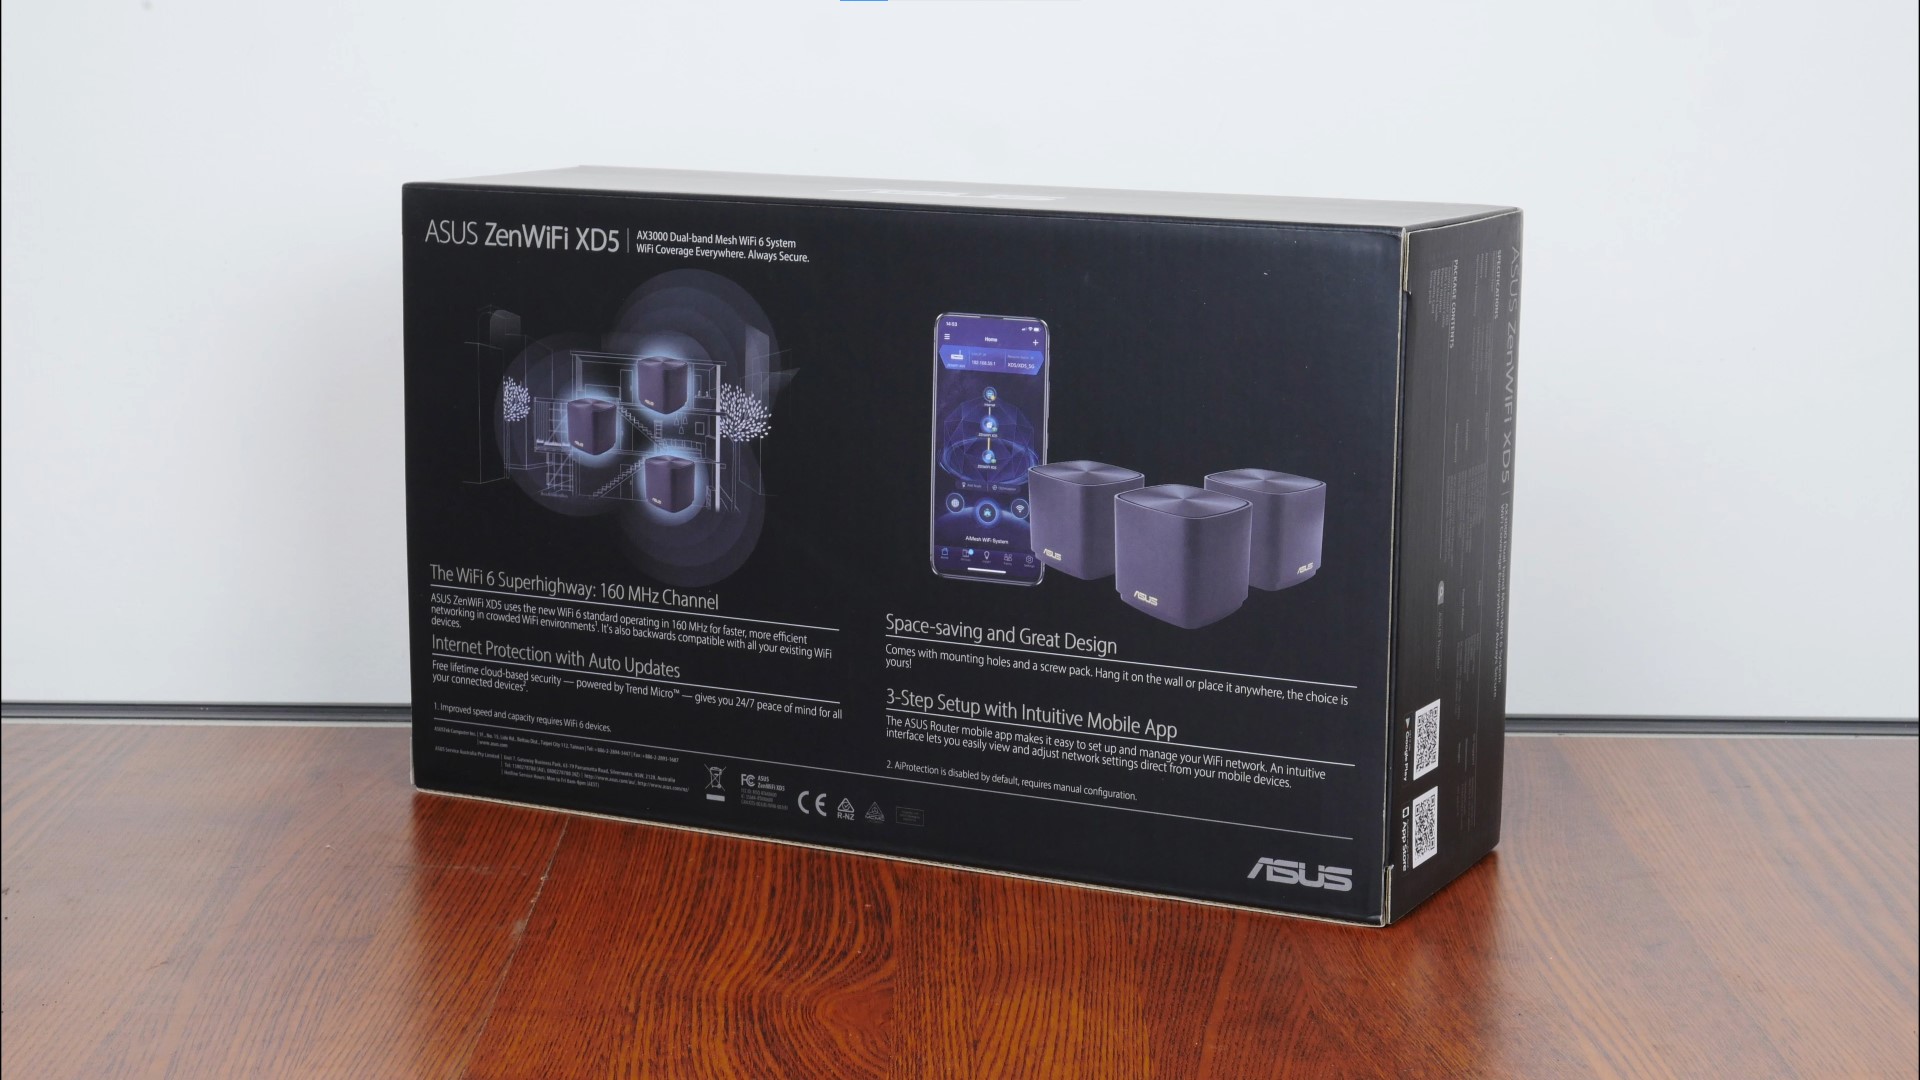 ASUS ZenWiFi XD5 Packaging (Rear)